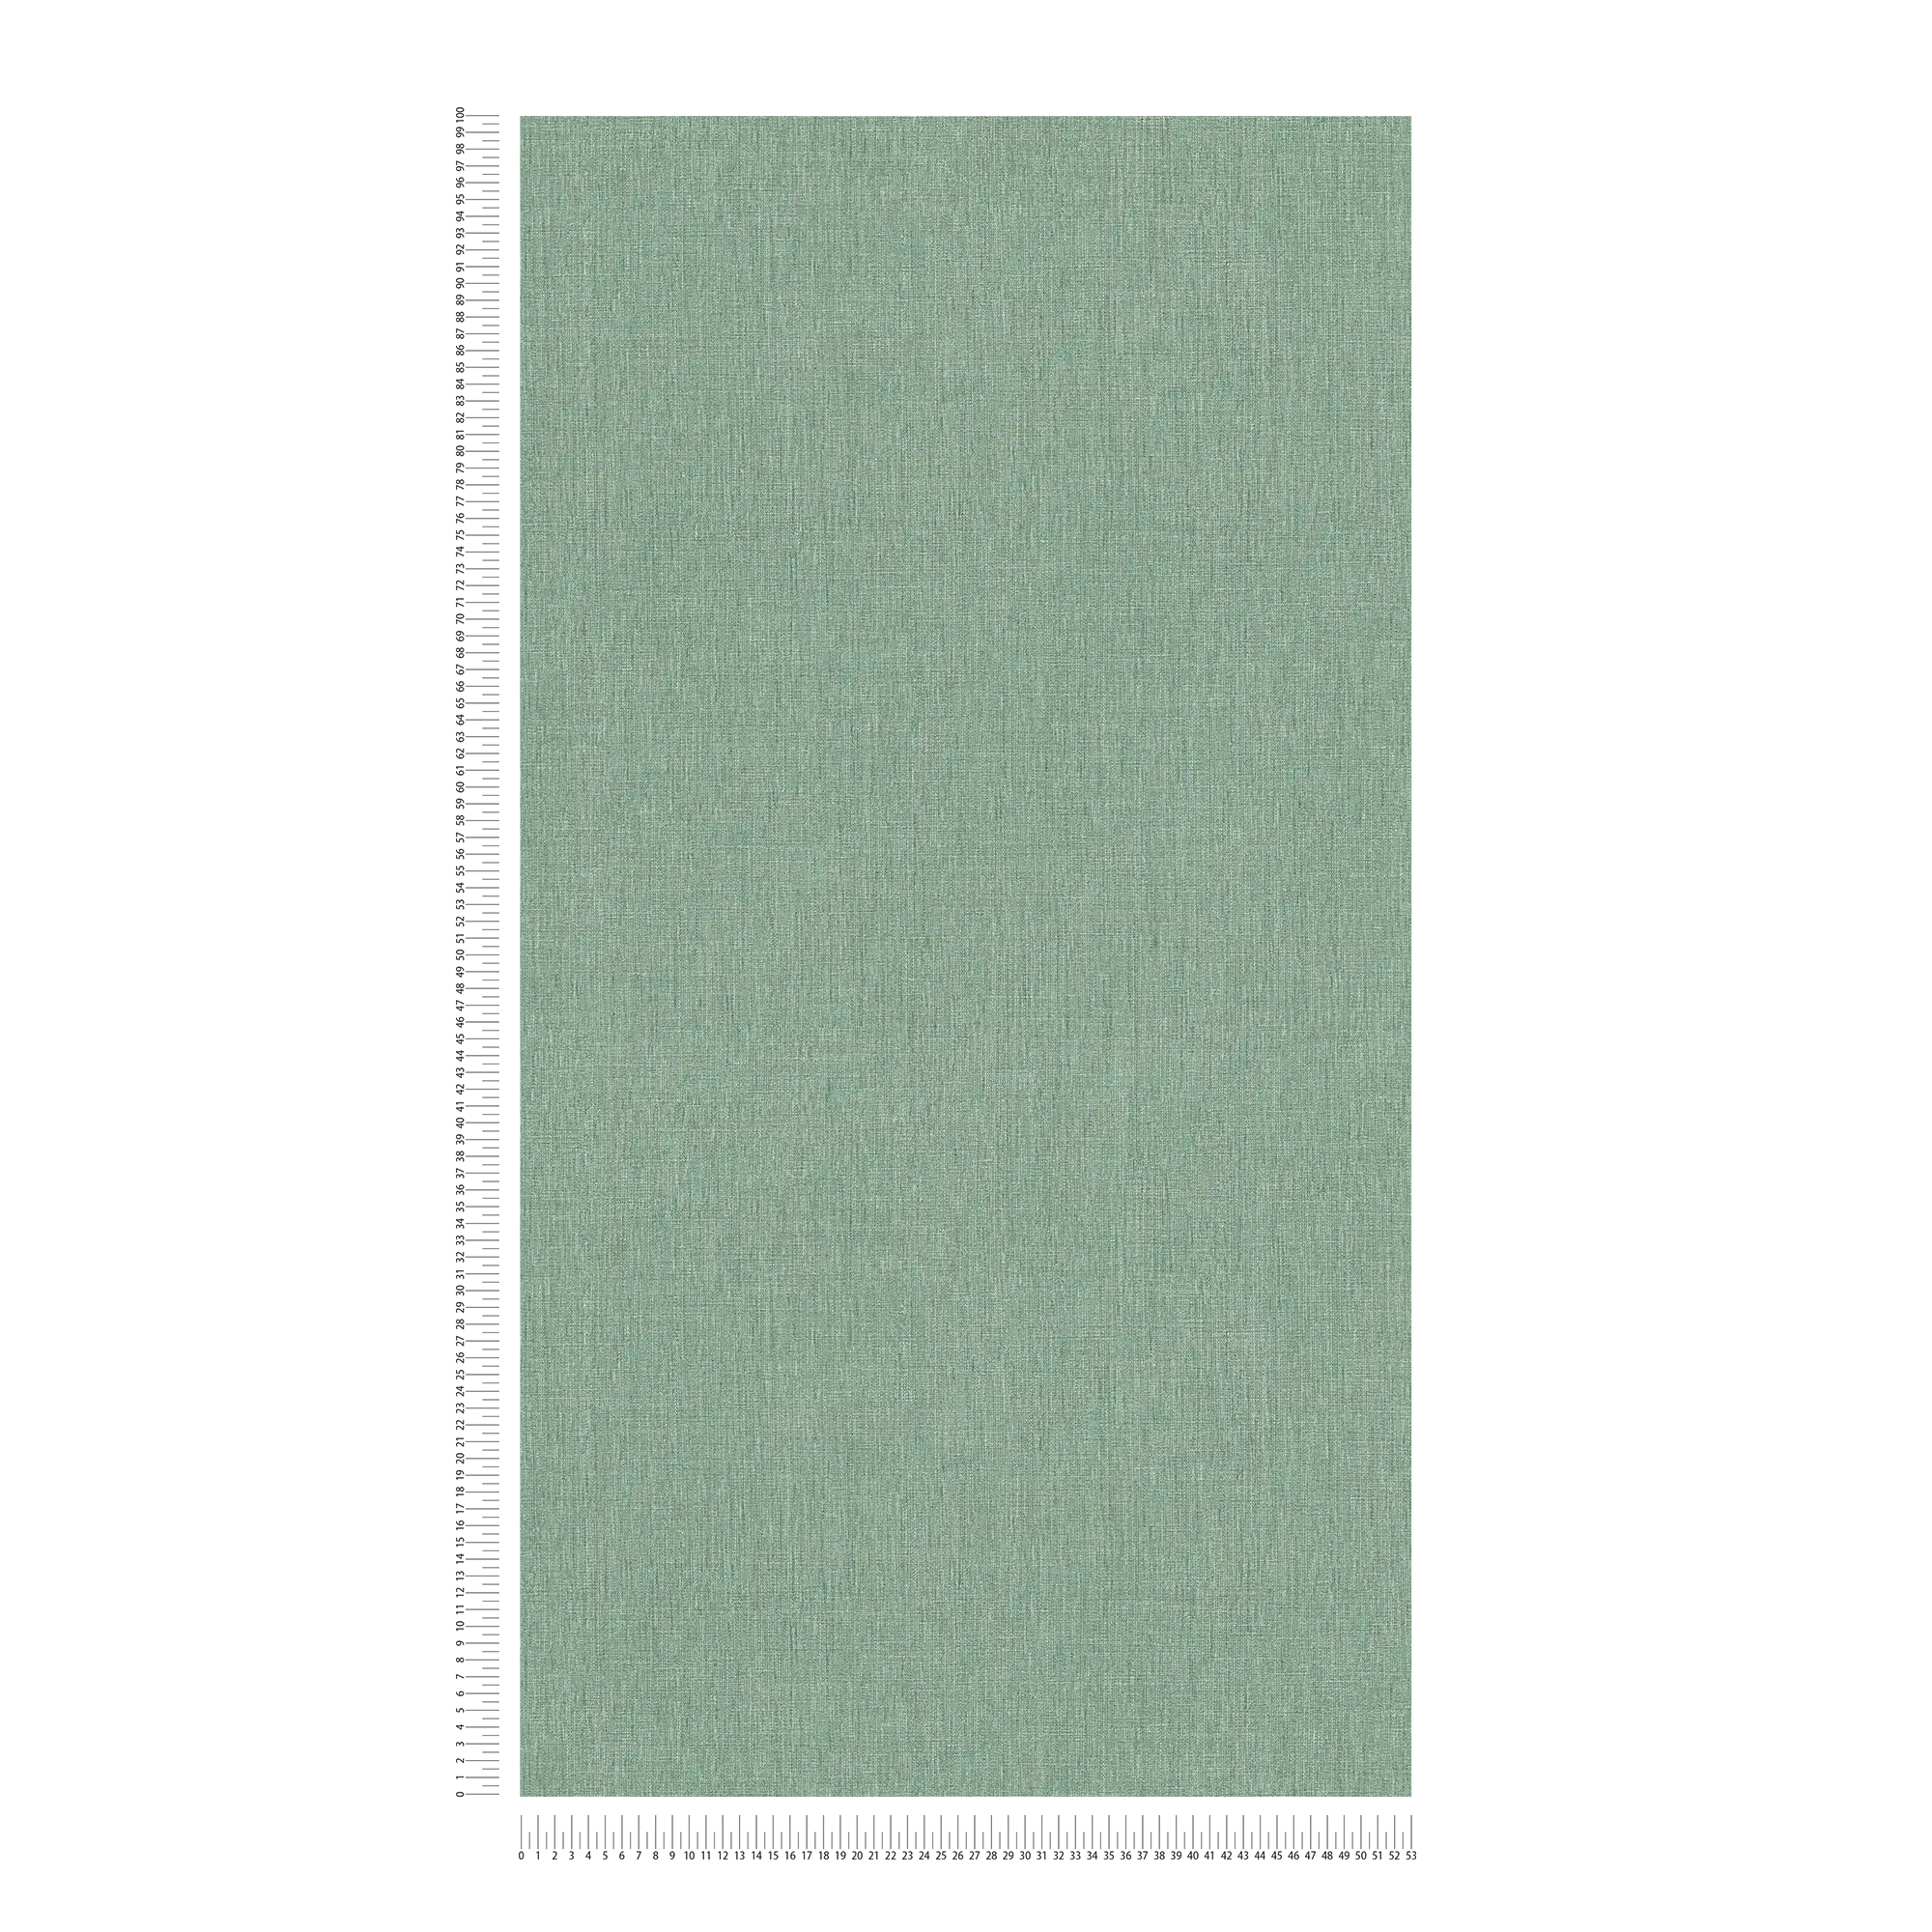             Carta da parati unitaria in look tessile con texture - verde
        